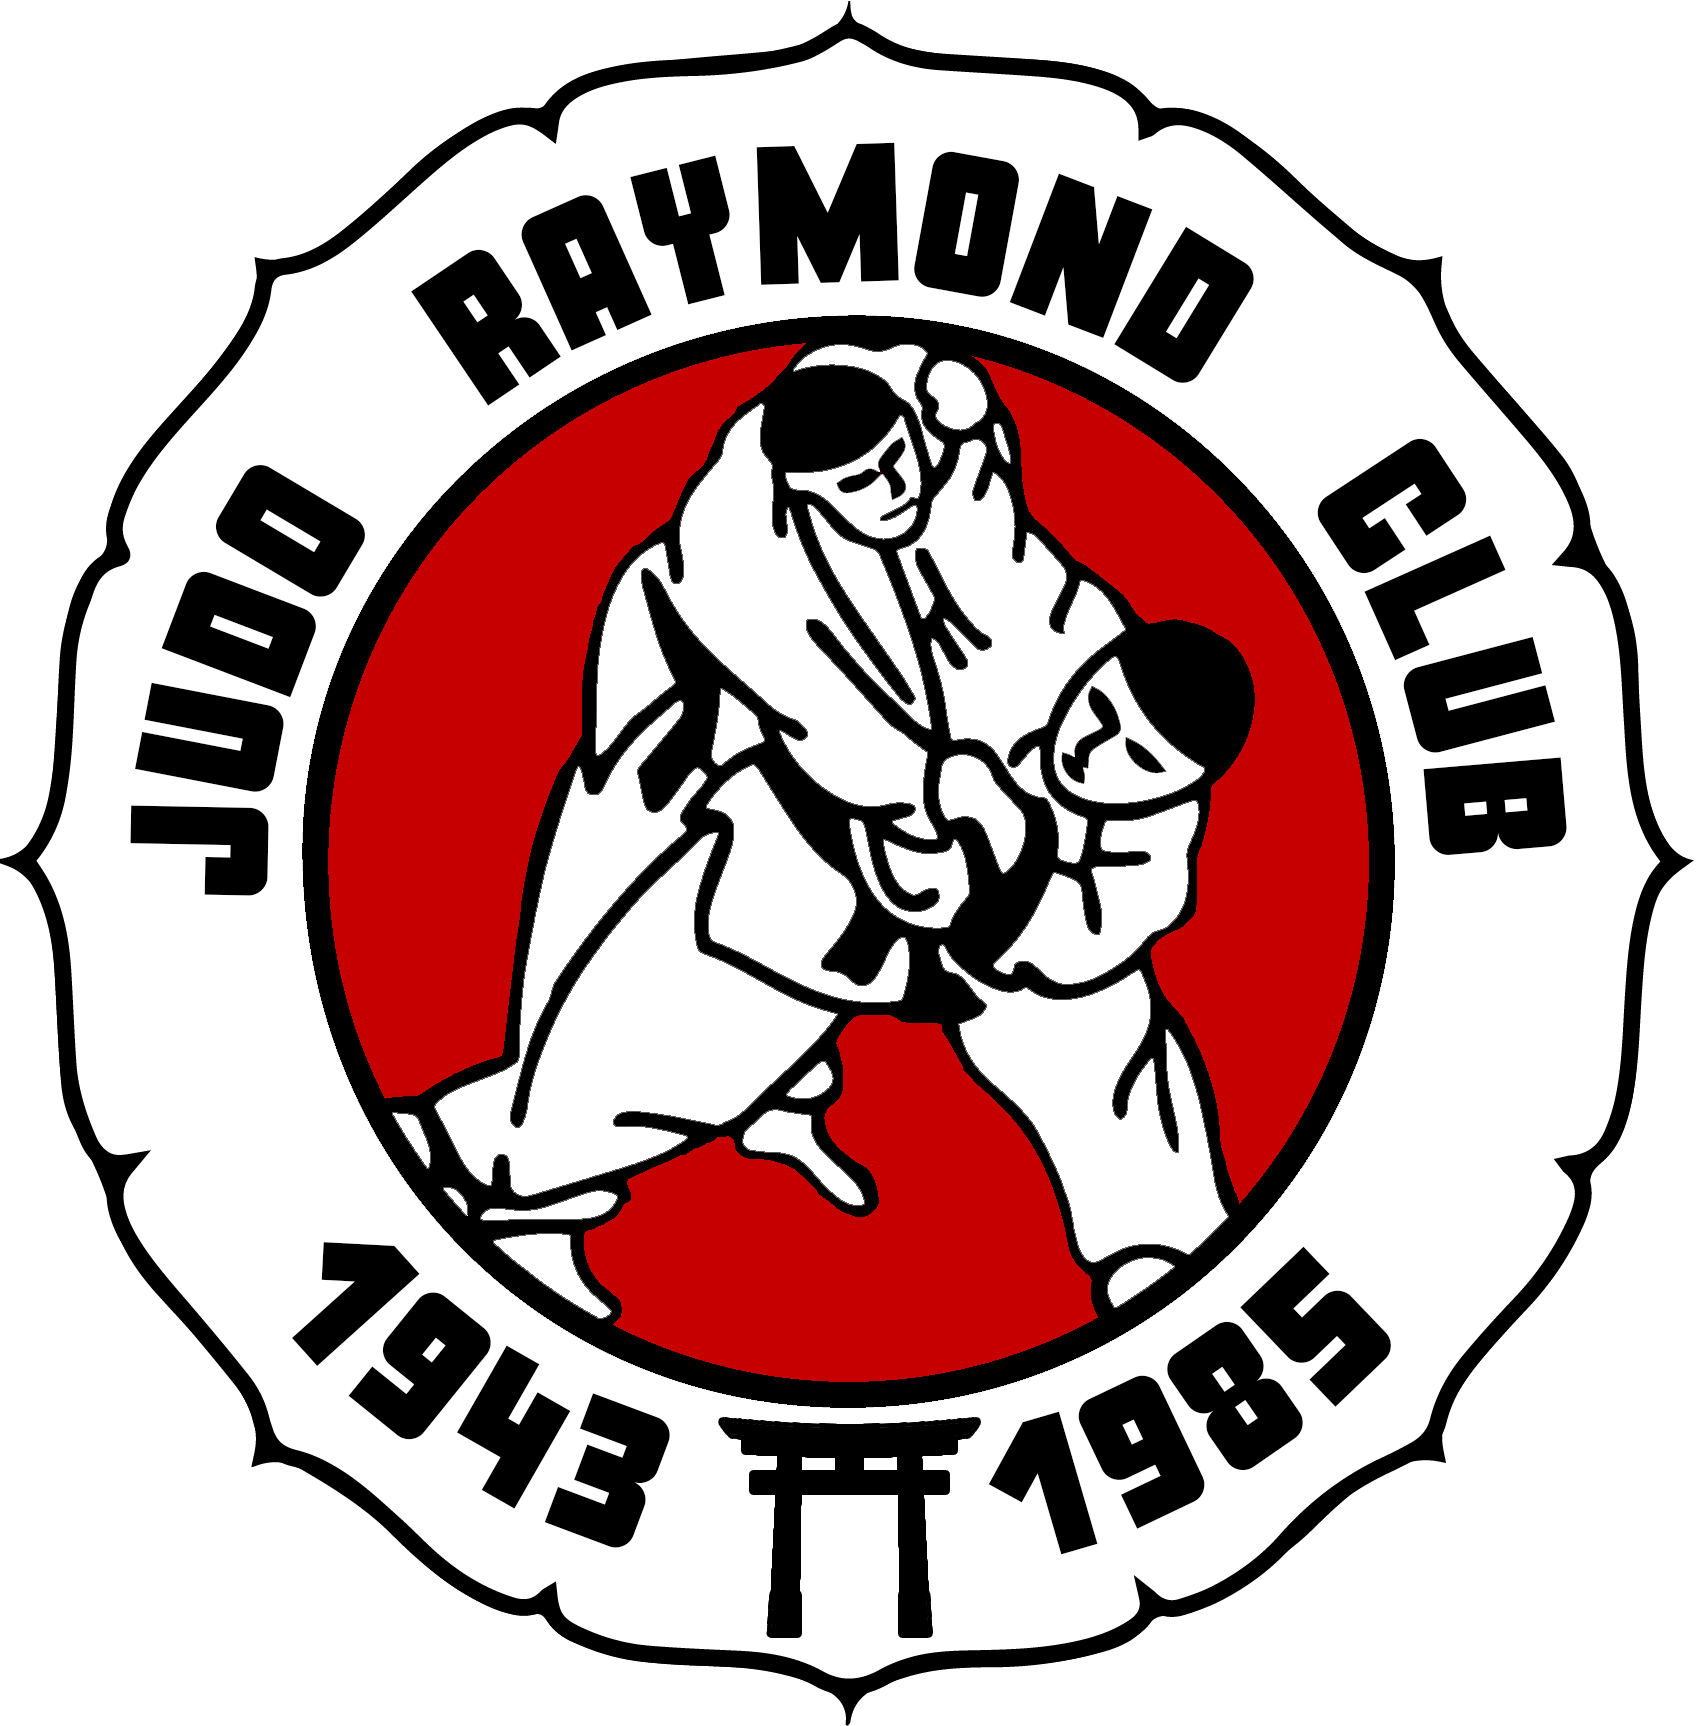 Kata Clinic Hosted by the Raymond Judo Club